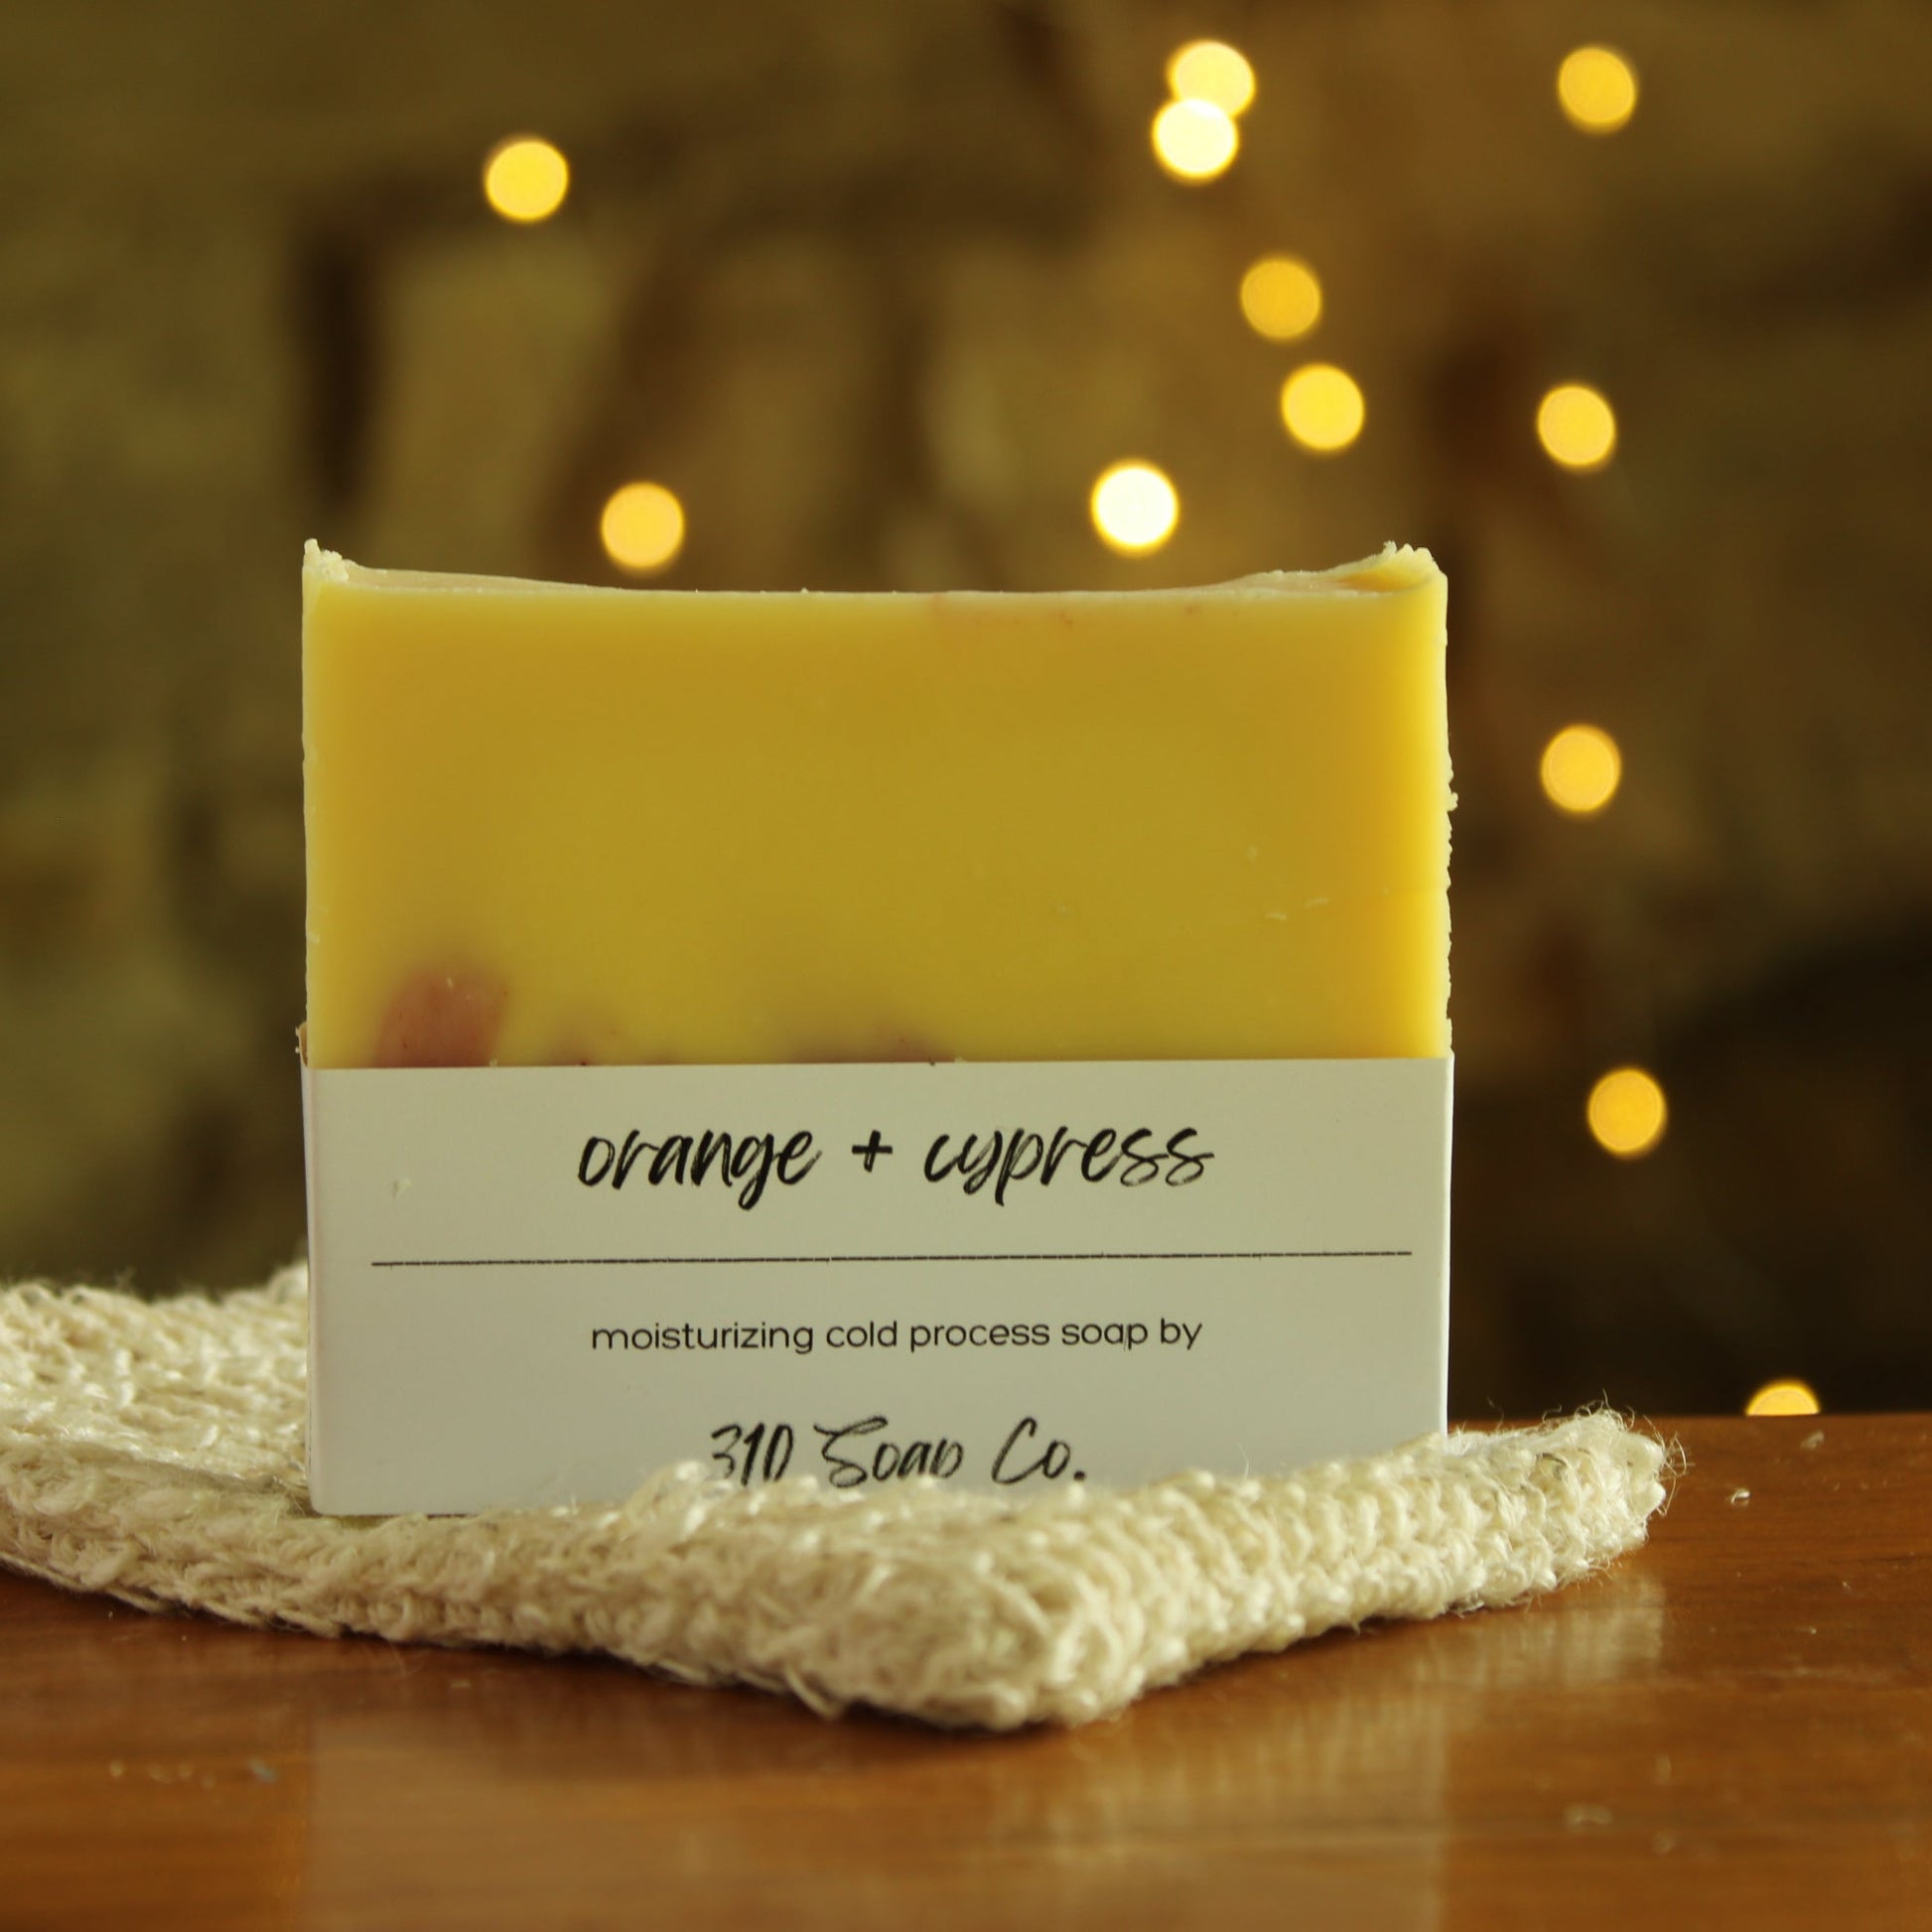 All Natural Soap | Orange + Cypress Cold Process Artisan Soap | Citrus, Woodsy | 310 Soap + Skin - 310 Soap Company